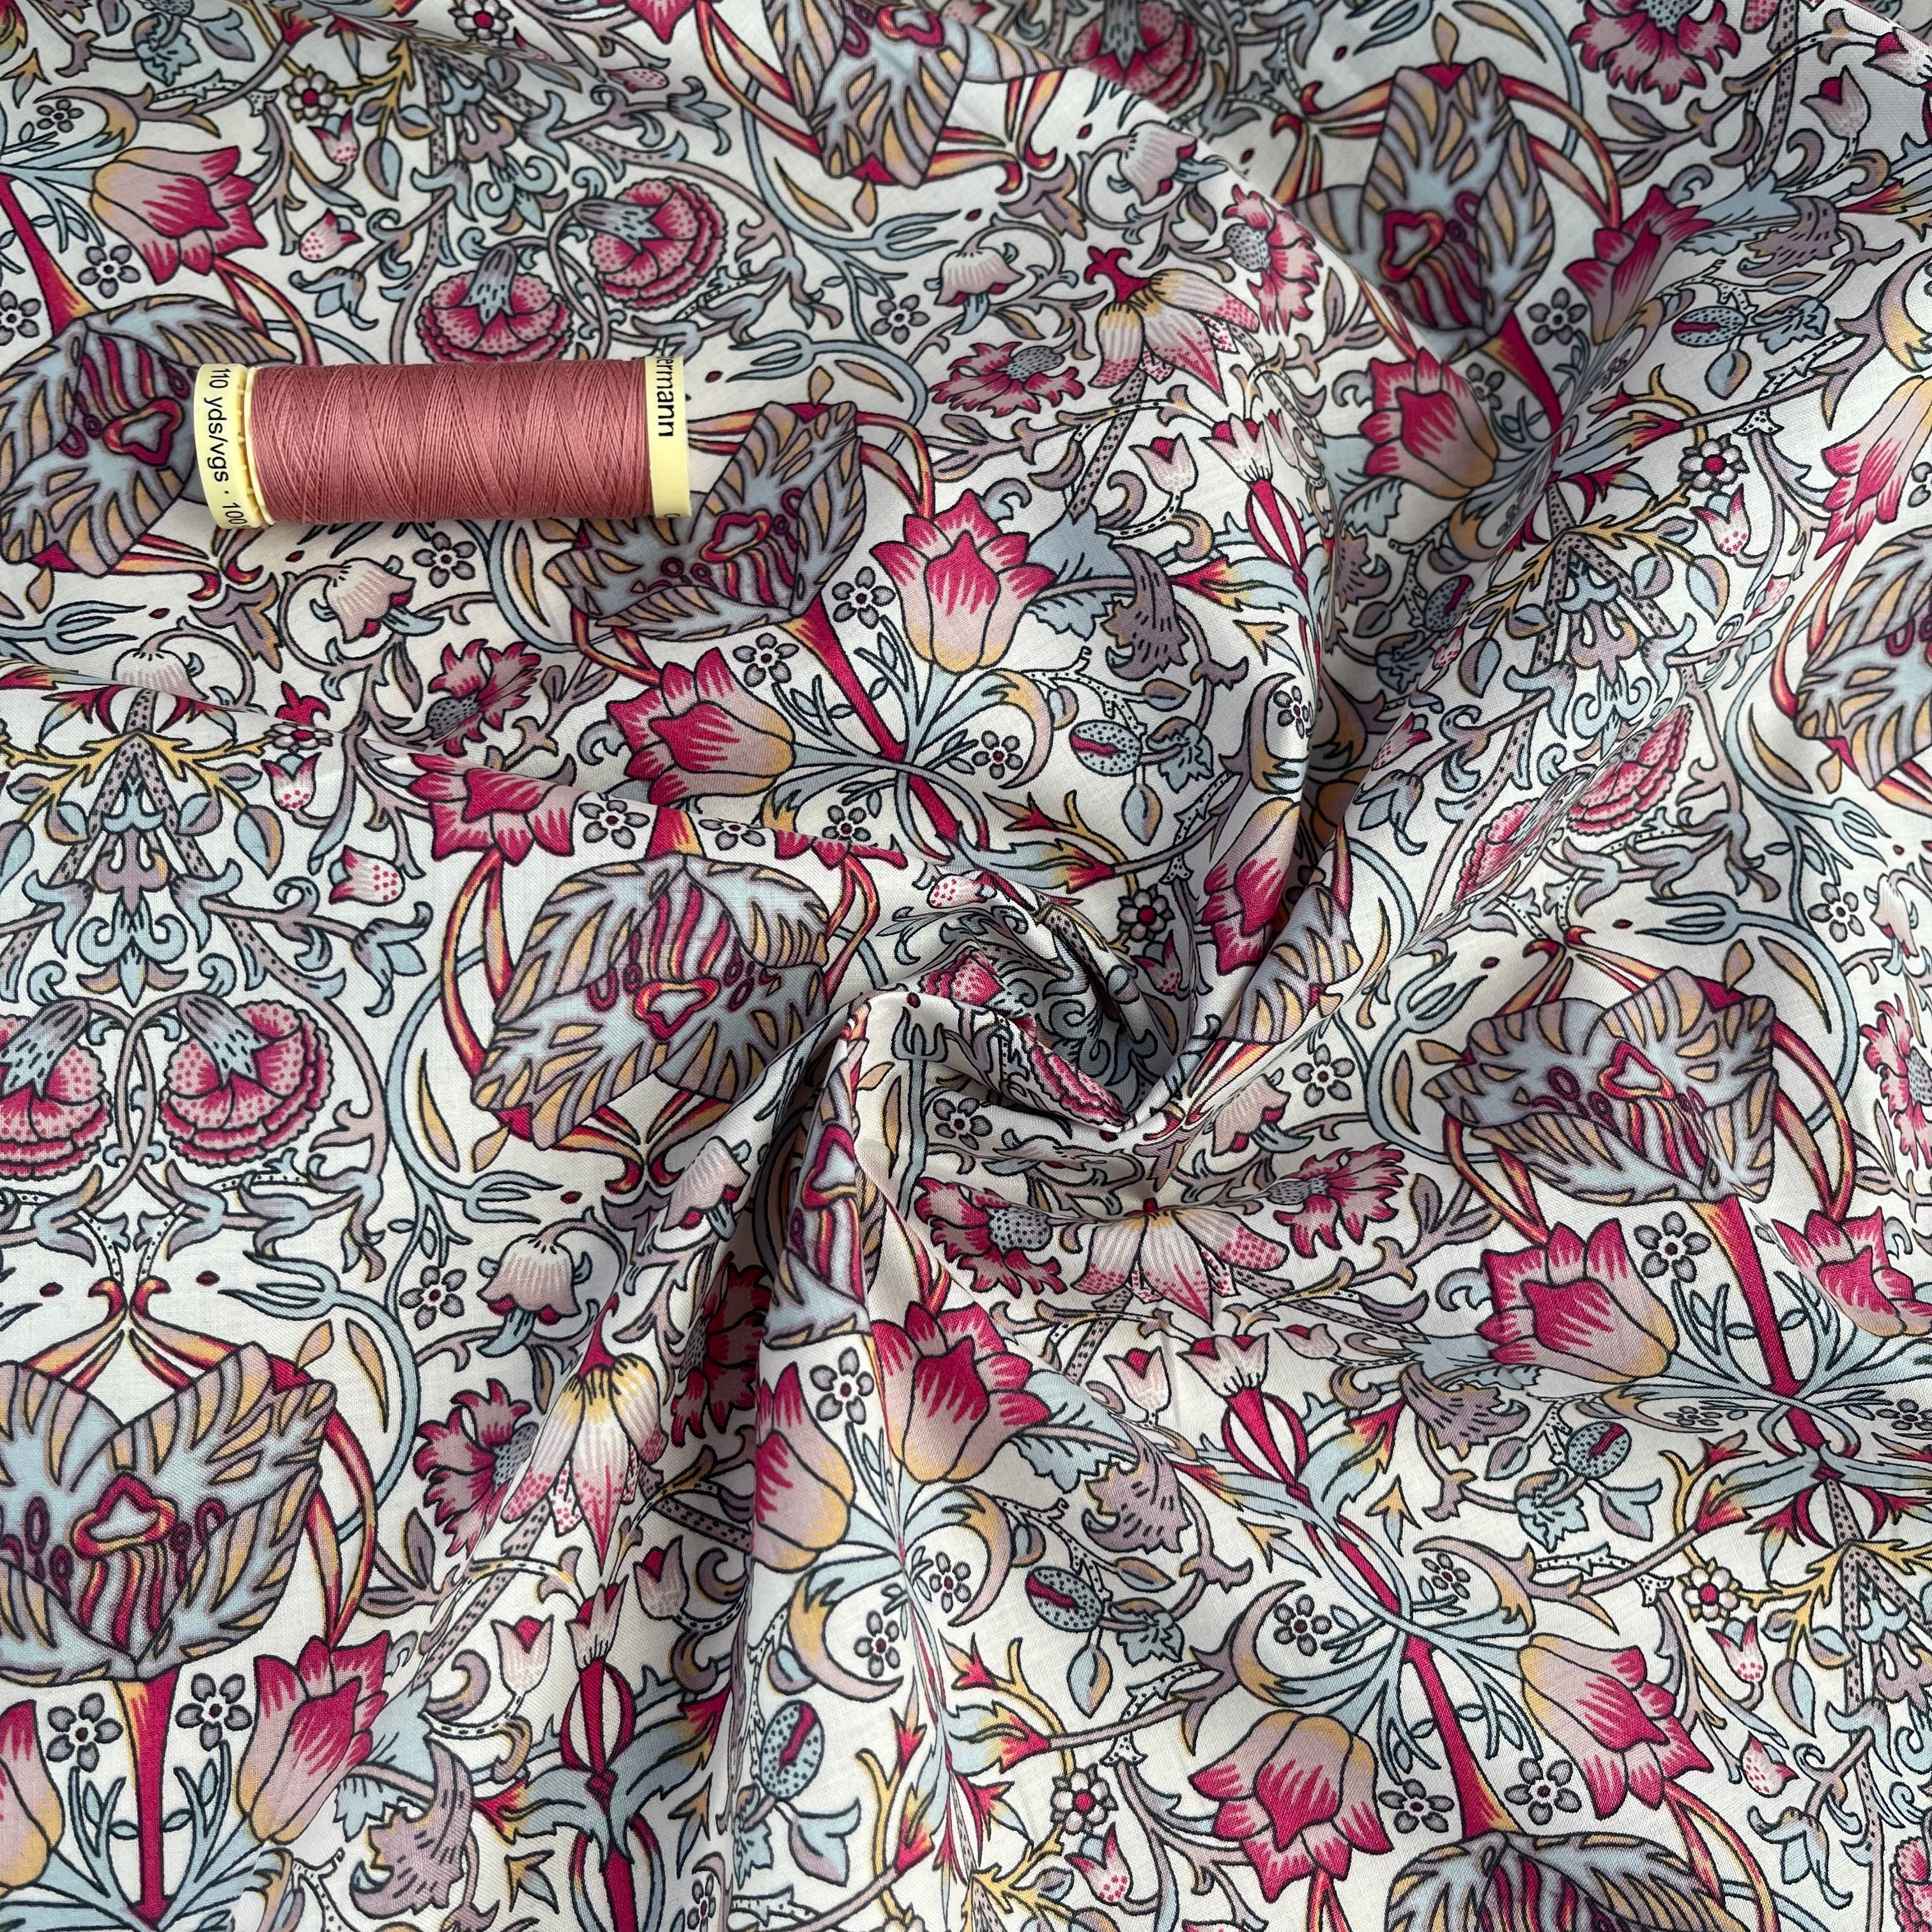 Morris Pink Cotton Lawn Fabric